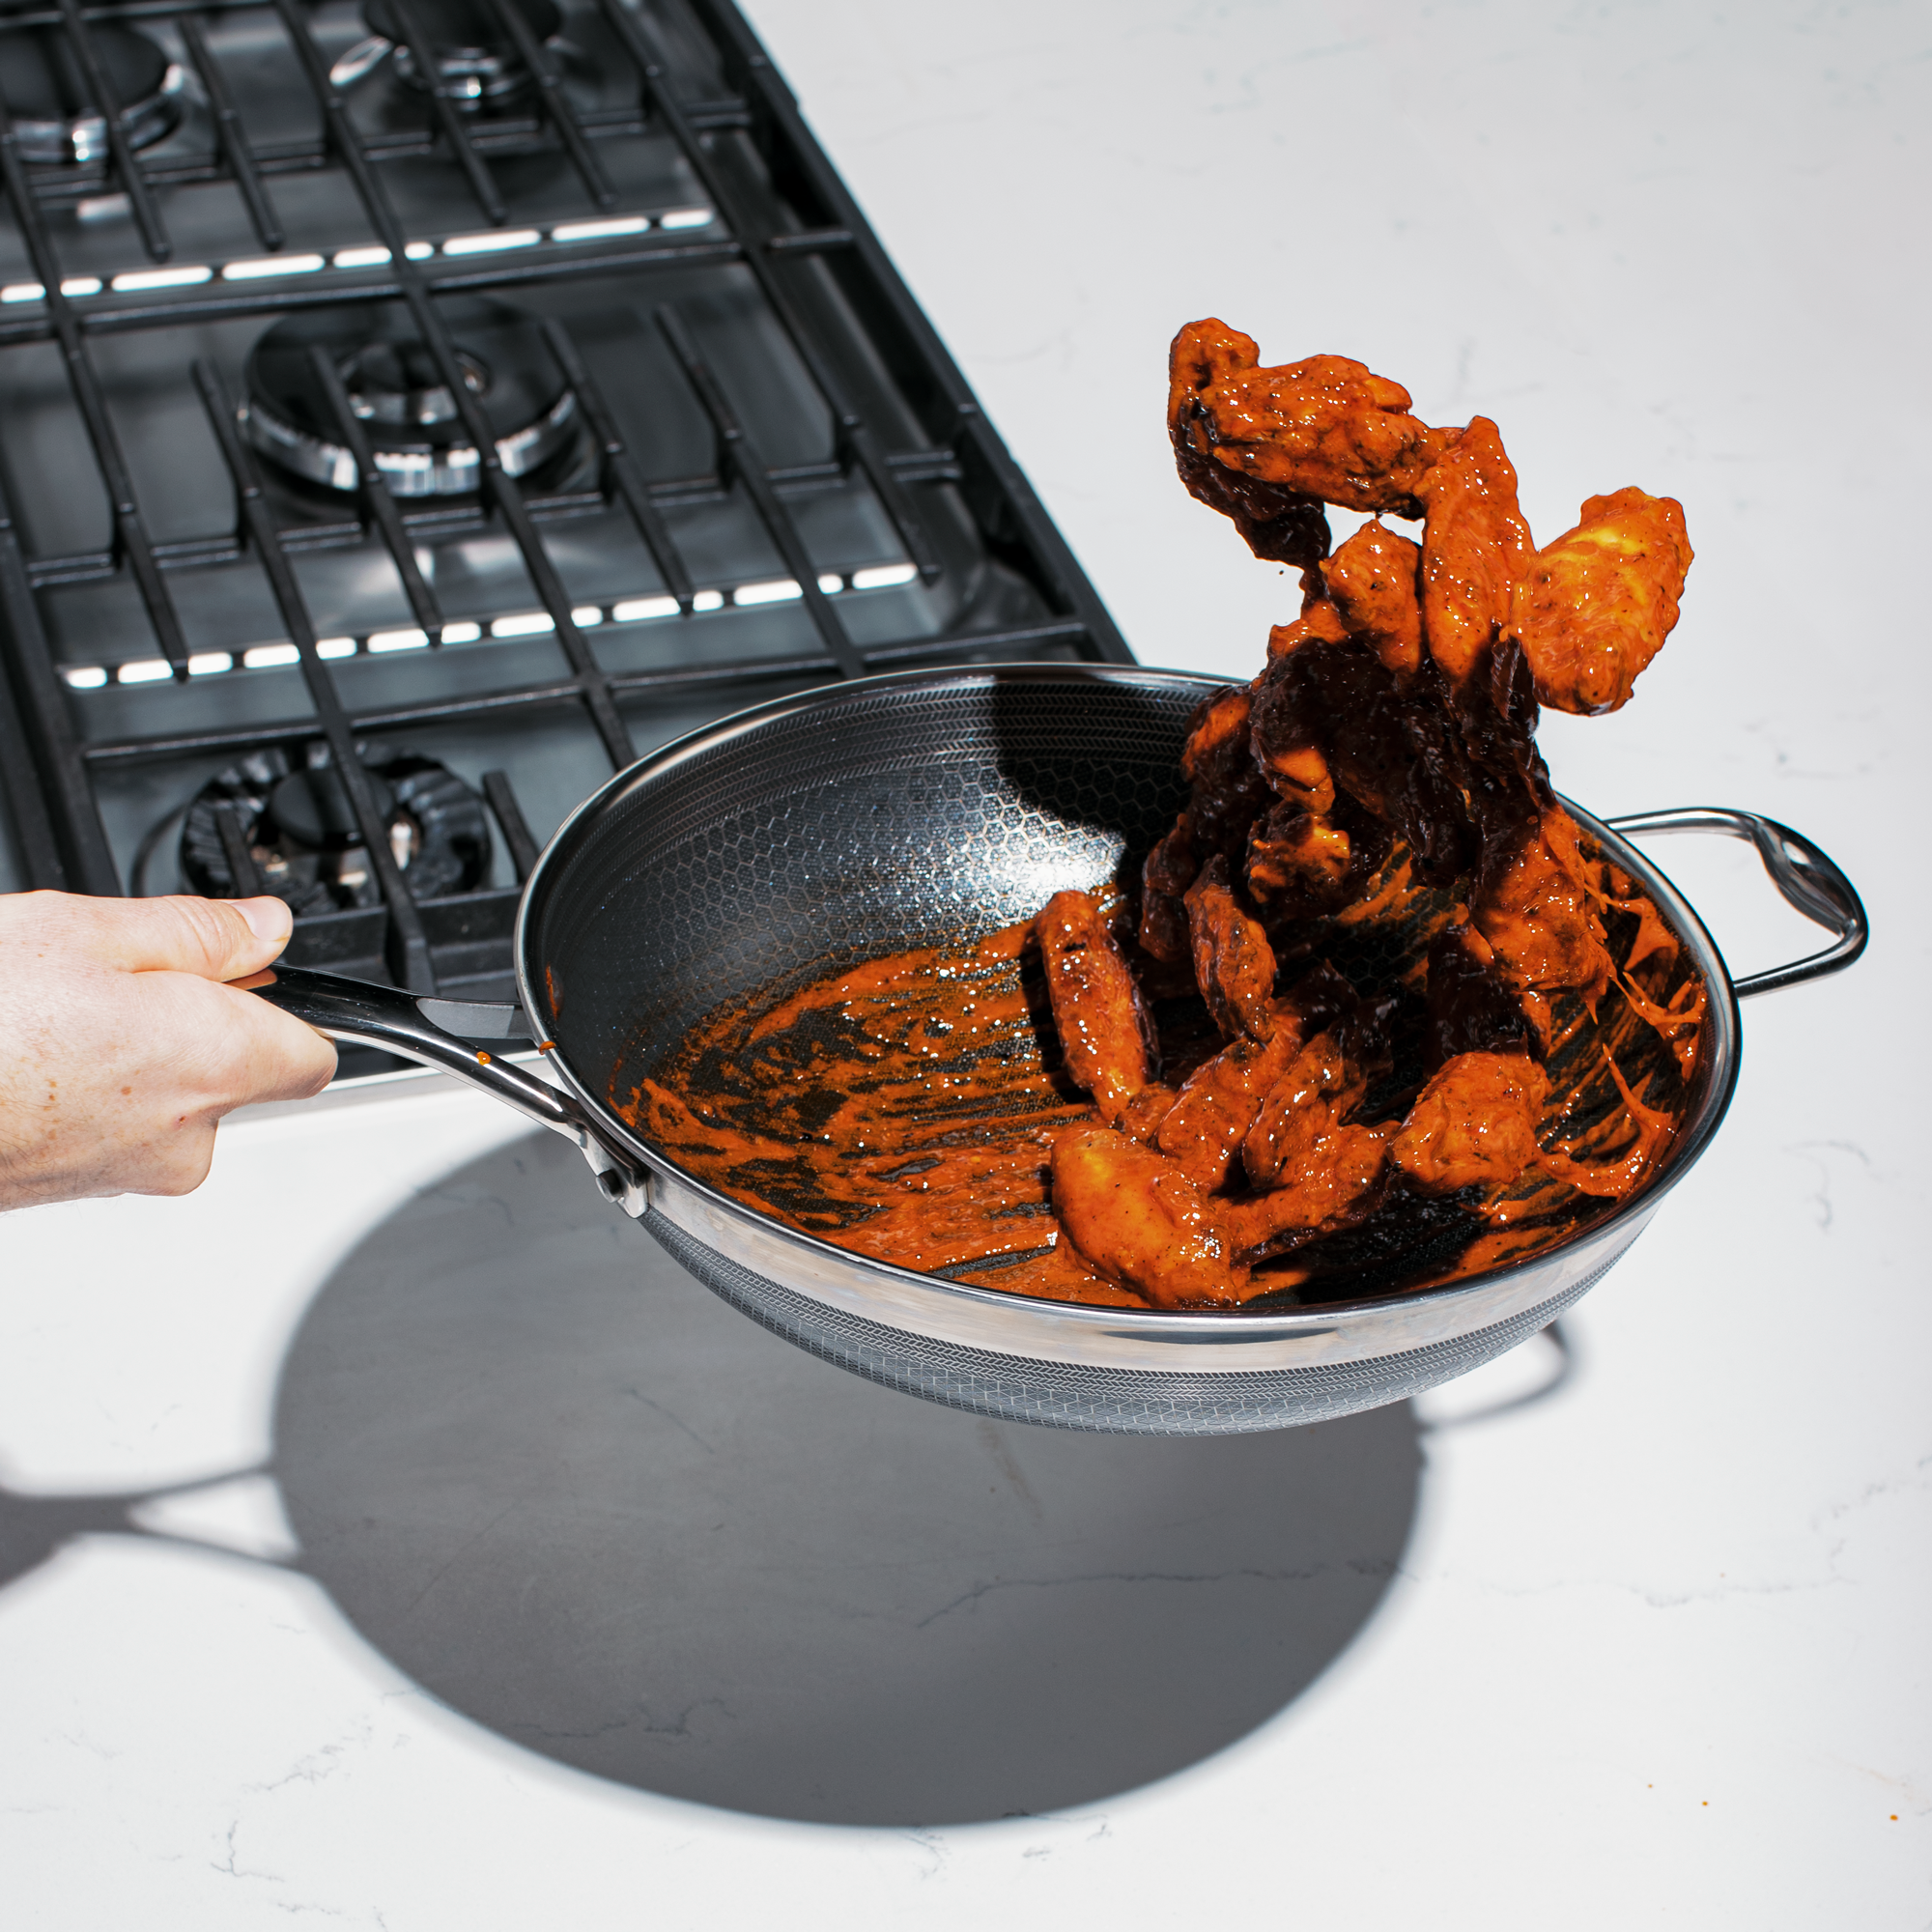  Gordon Ramsay Cookware: Home & Kitchen